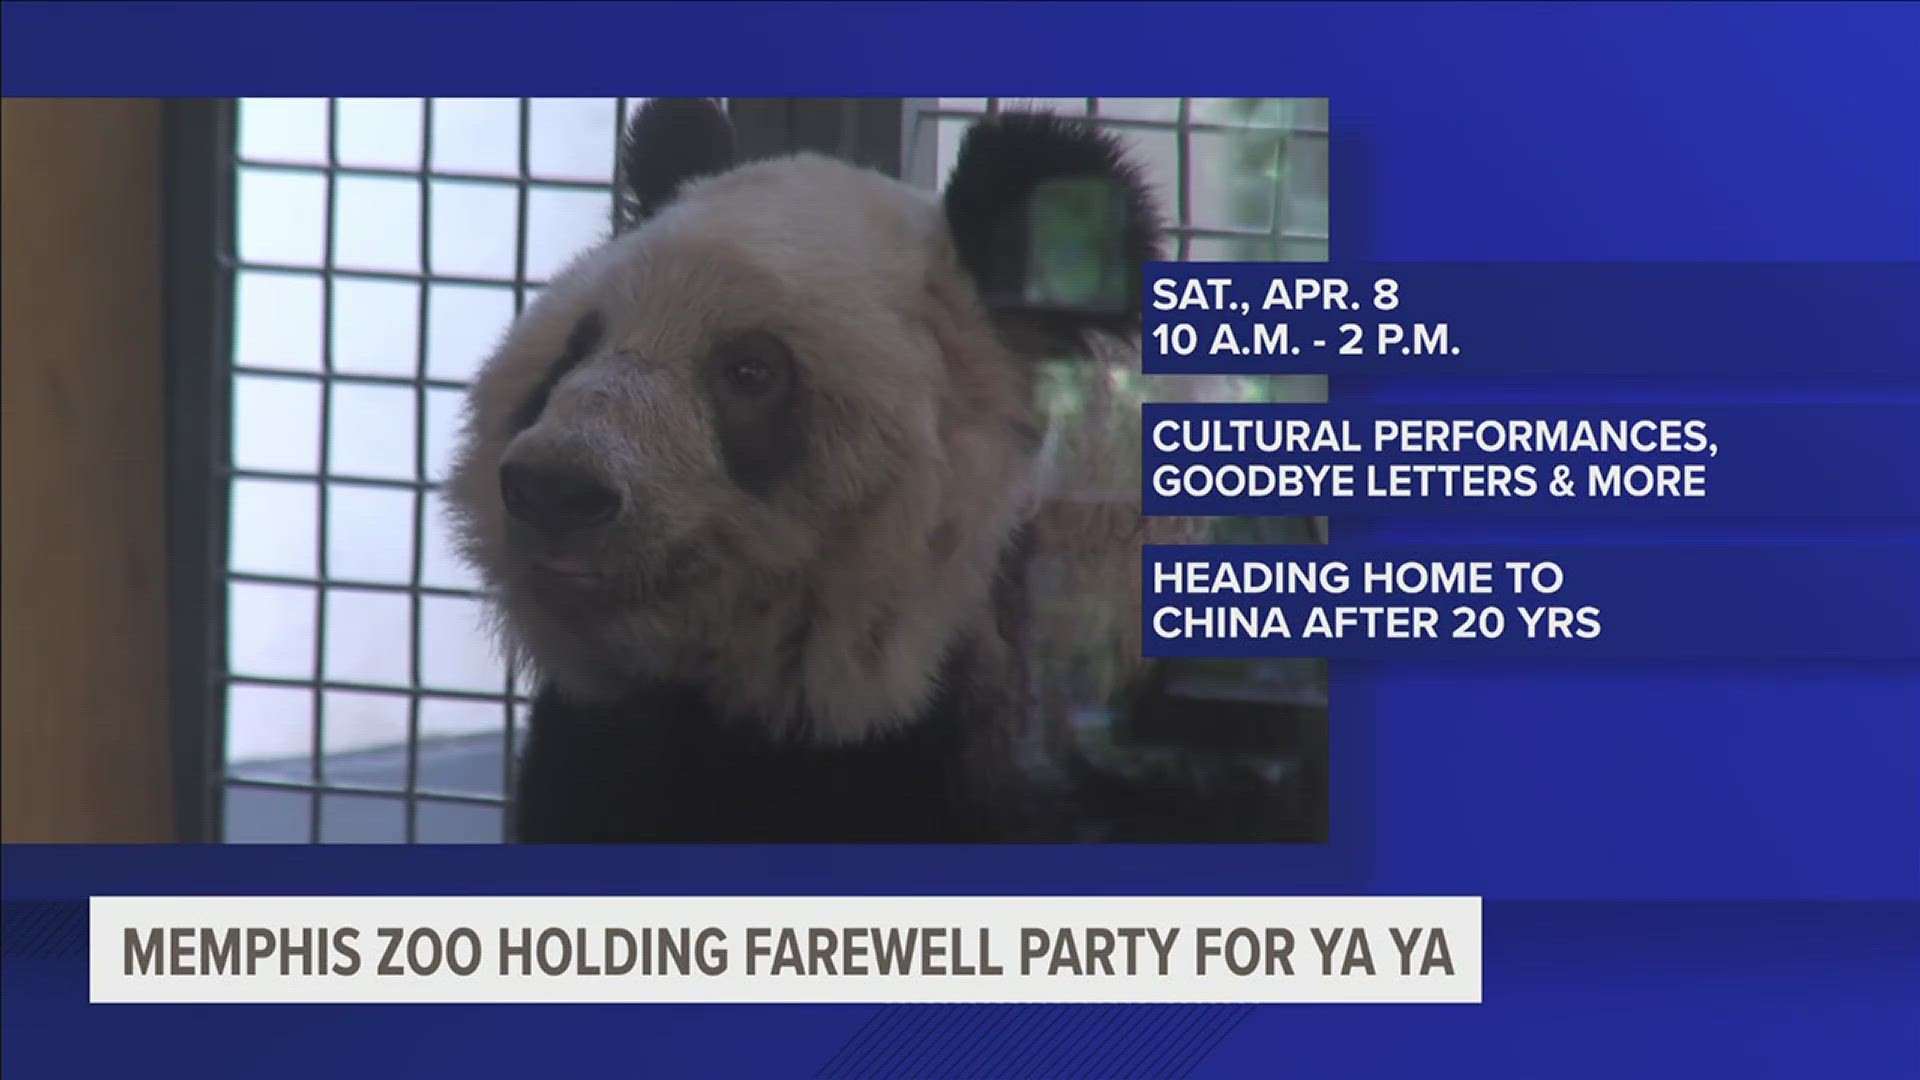 The Memphis Zoo wants you to help say goodbye to Ya Ya the giant panda on her way back to China